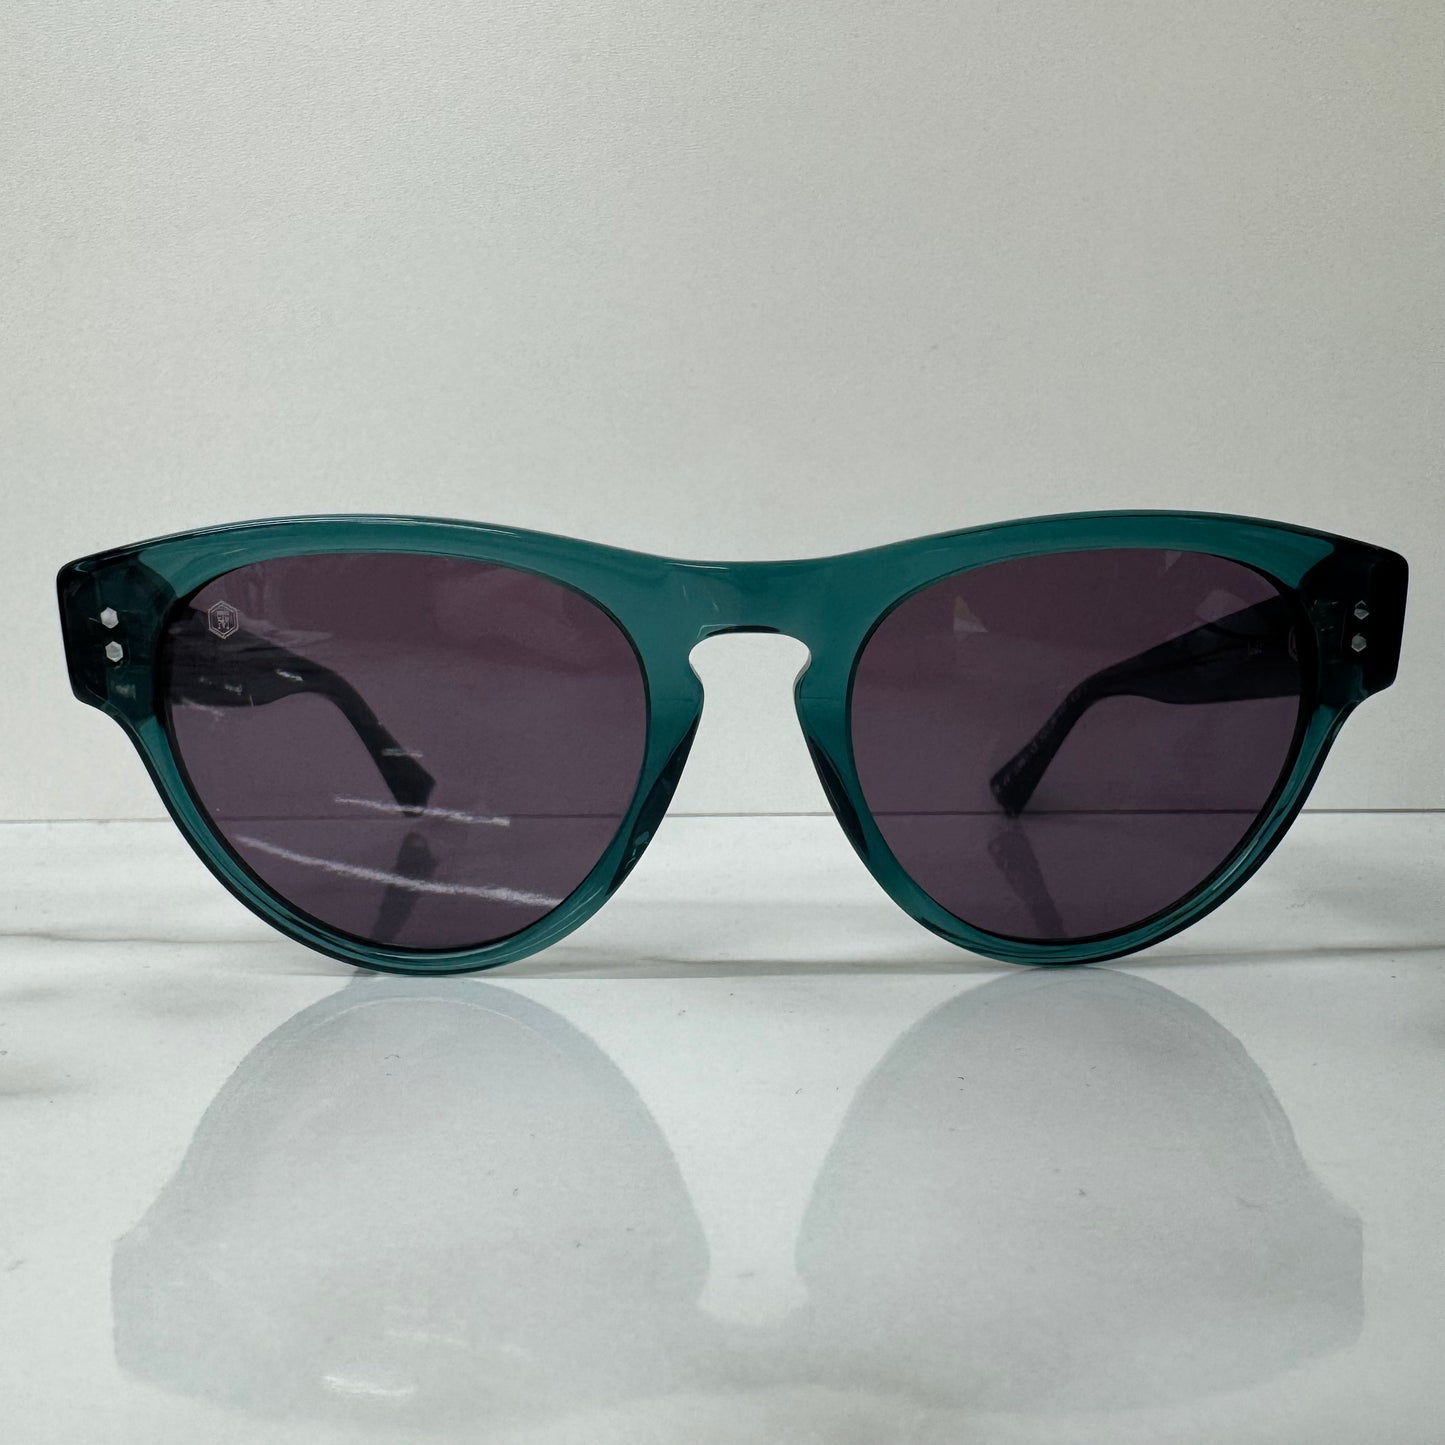 Taylor Morris Jude Green Sunglasses - 32082 C5